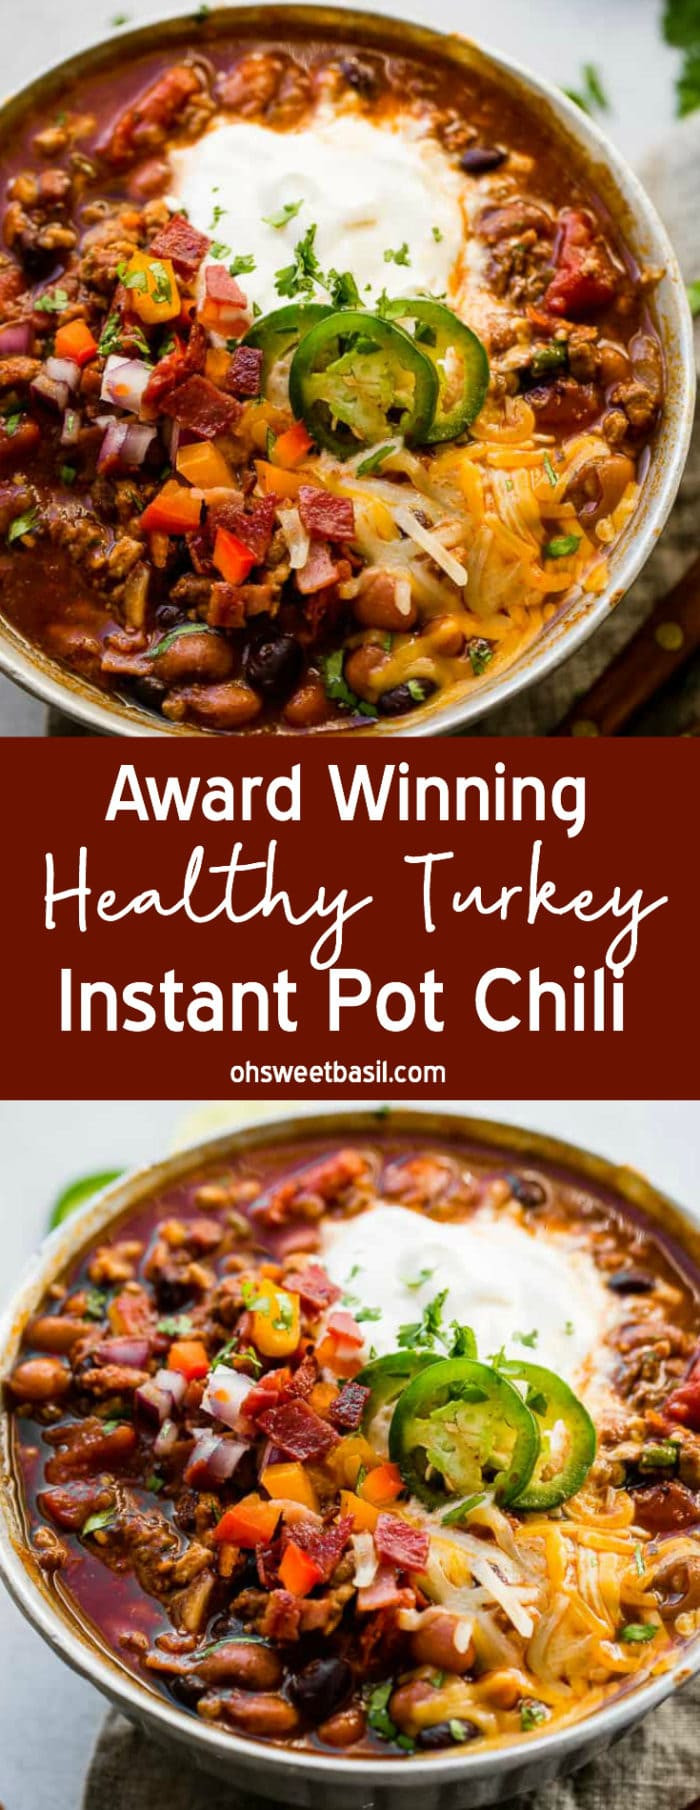 Award Winning Turkey Chili Recipe
 Award Winning Healthy Turkey Instant Pot Chili Oh Sweet